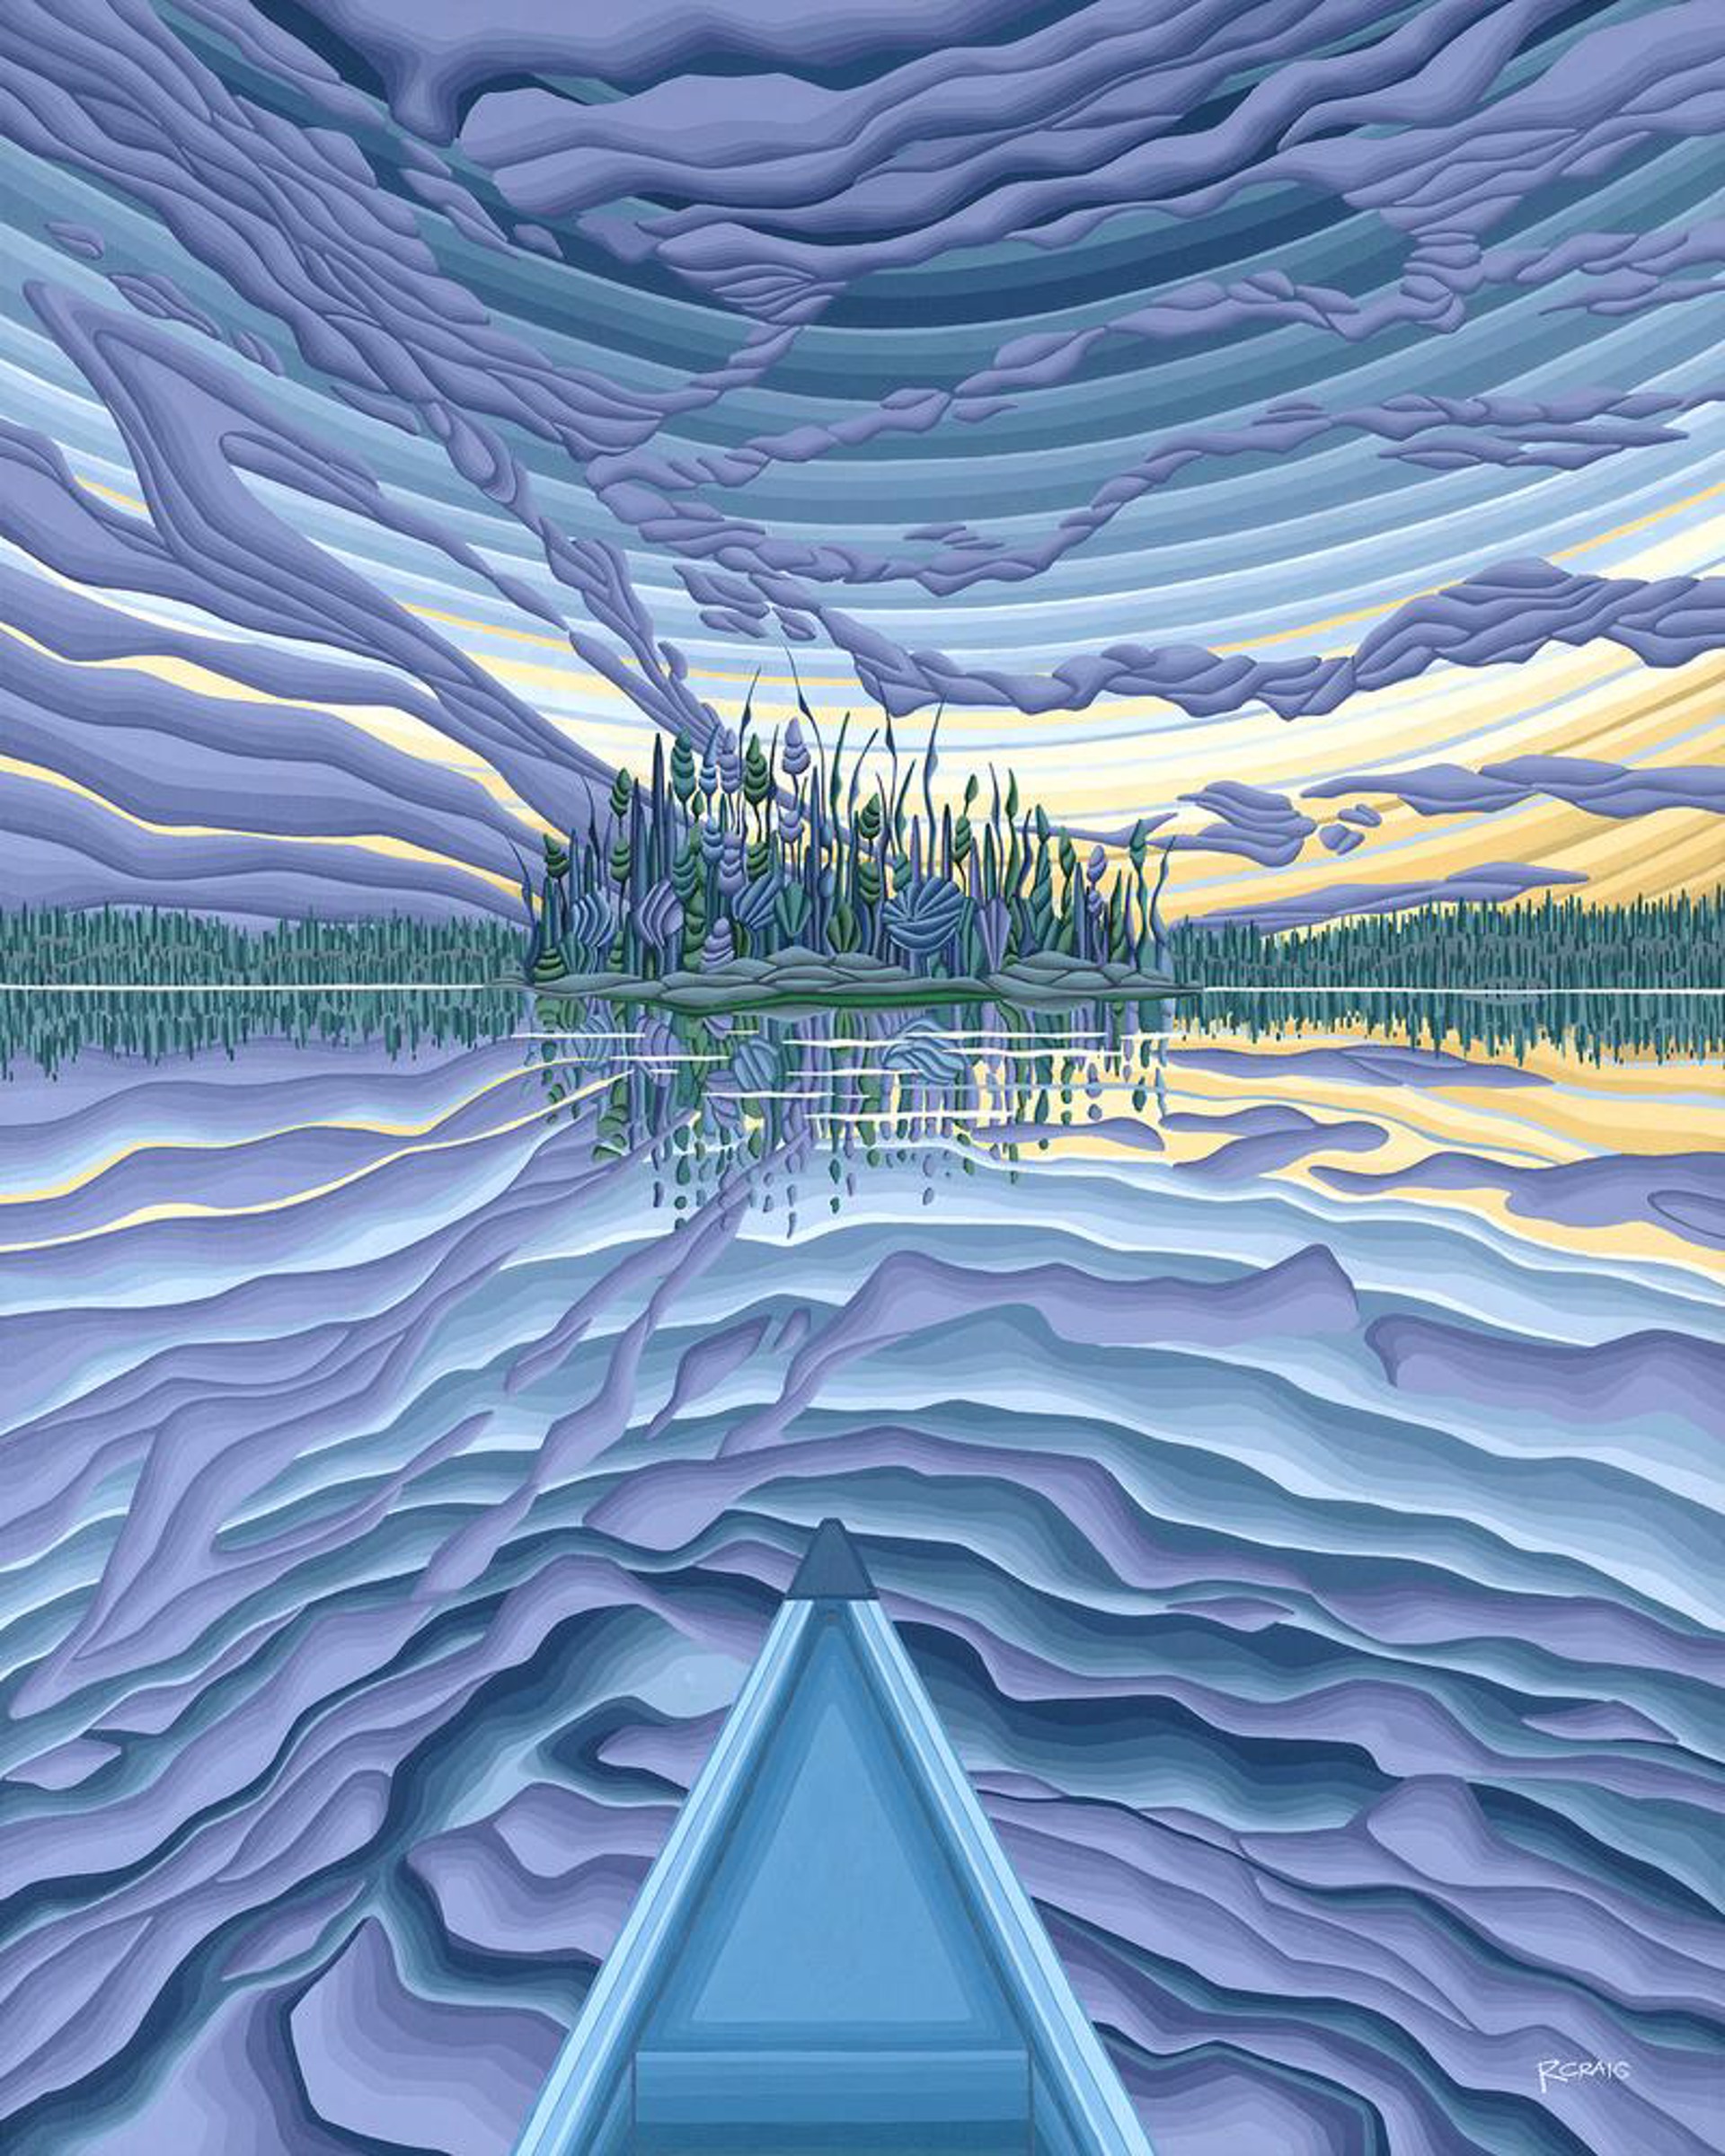 The Wild - Blue Canoe Print by Robbie Craig